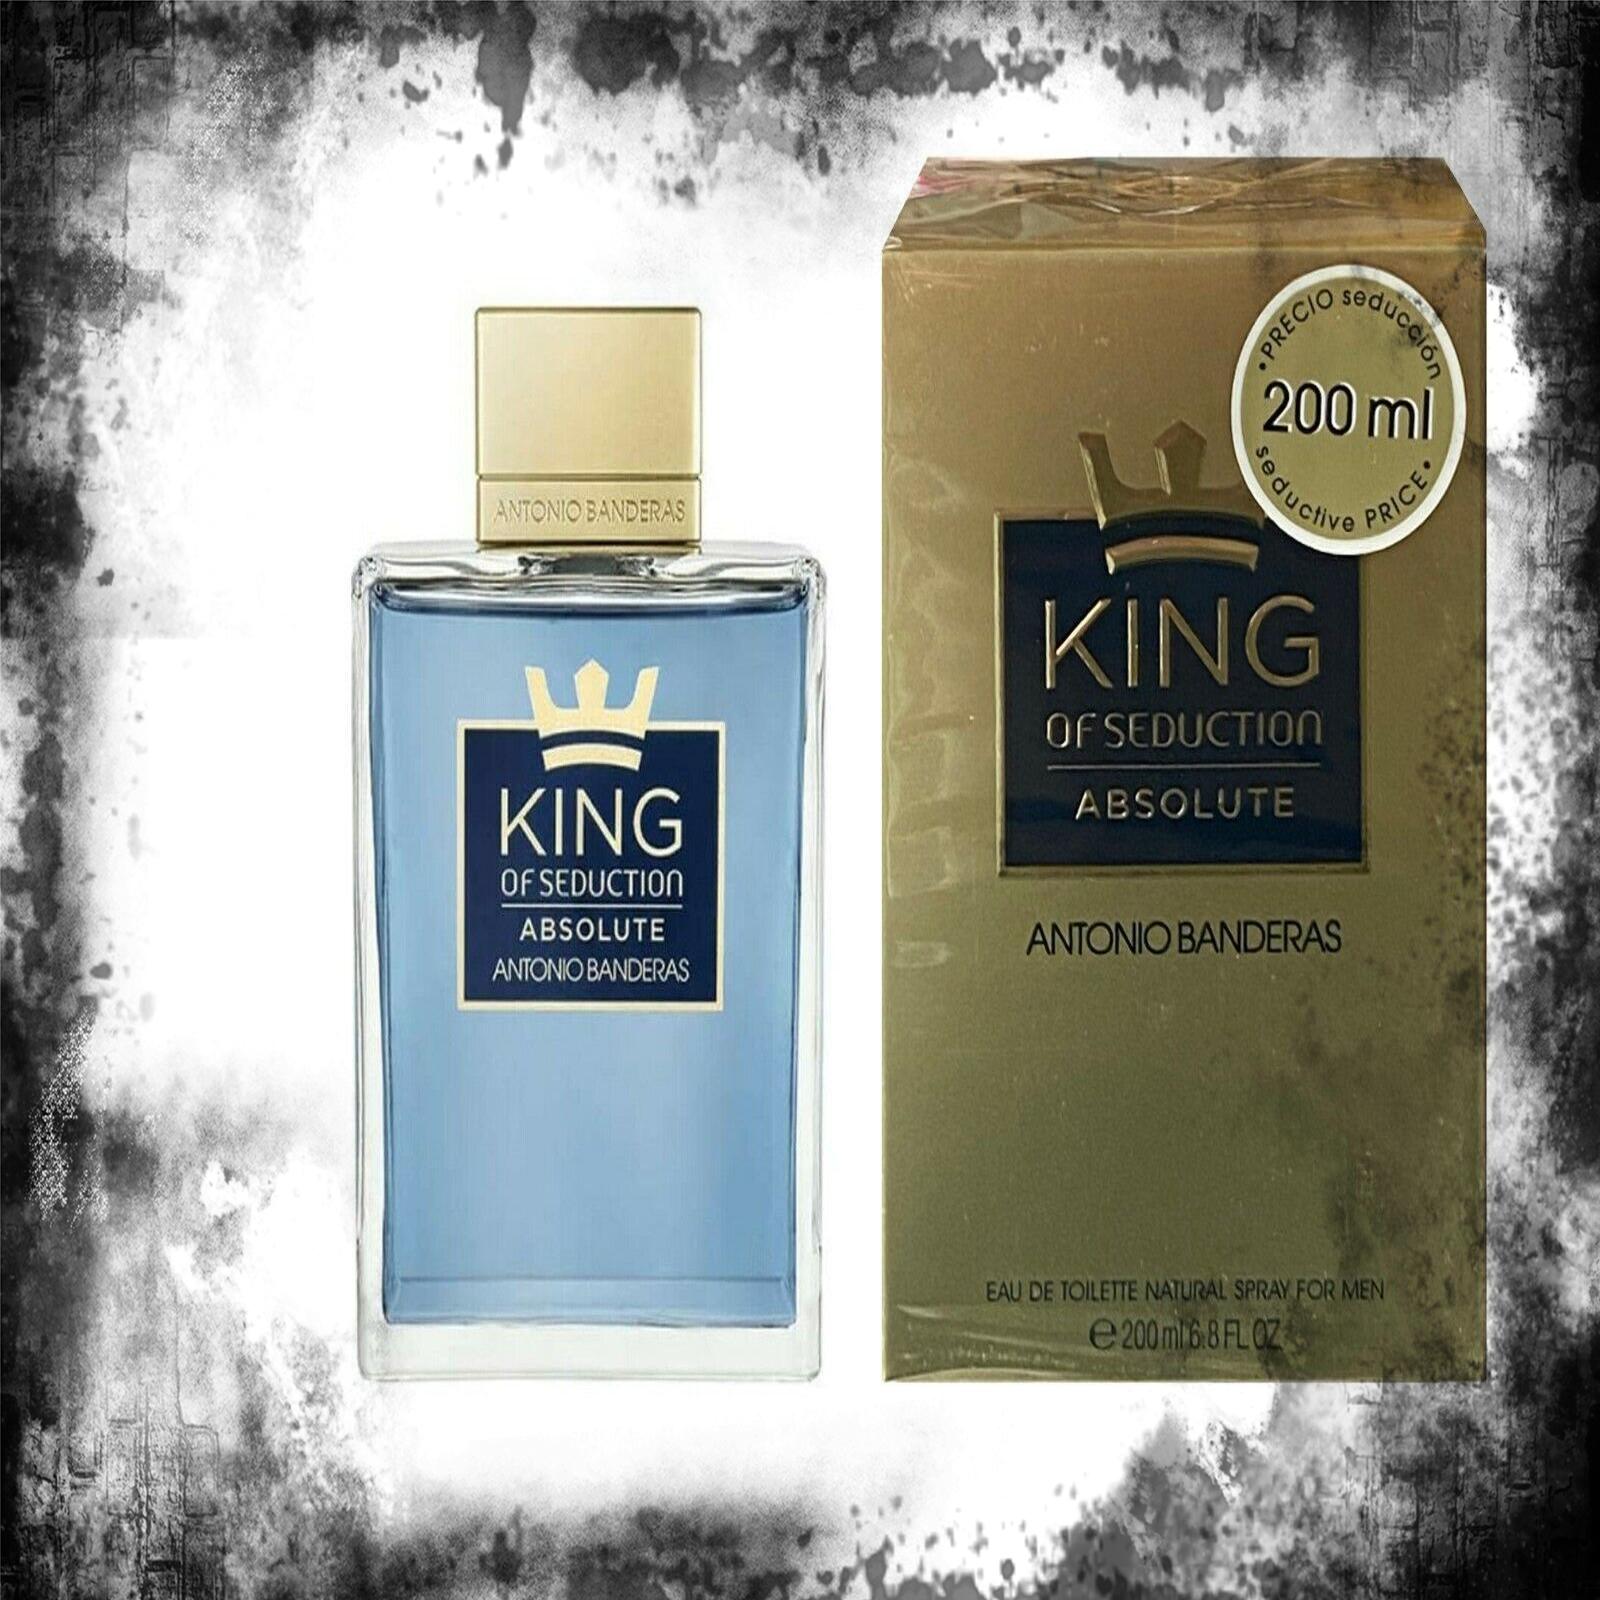 Antonio Banderas King of Seduction Absolute Eau de Toilette 200ml Spray